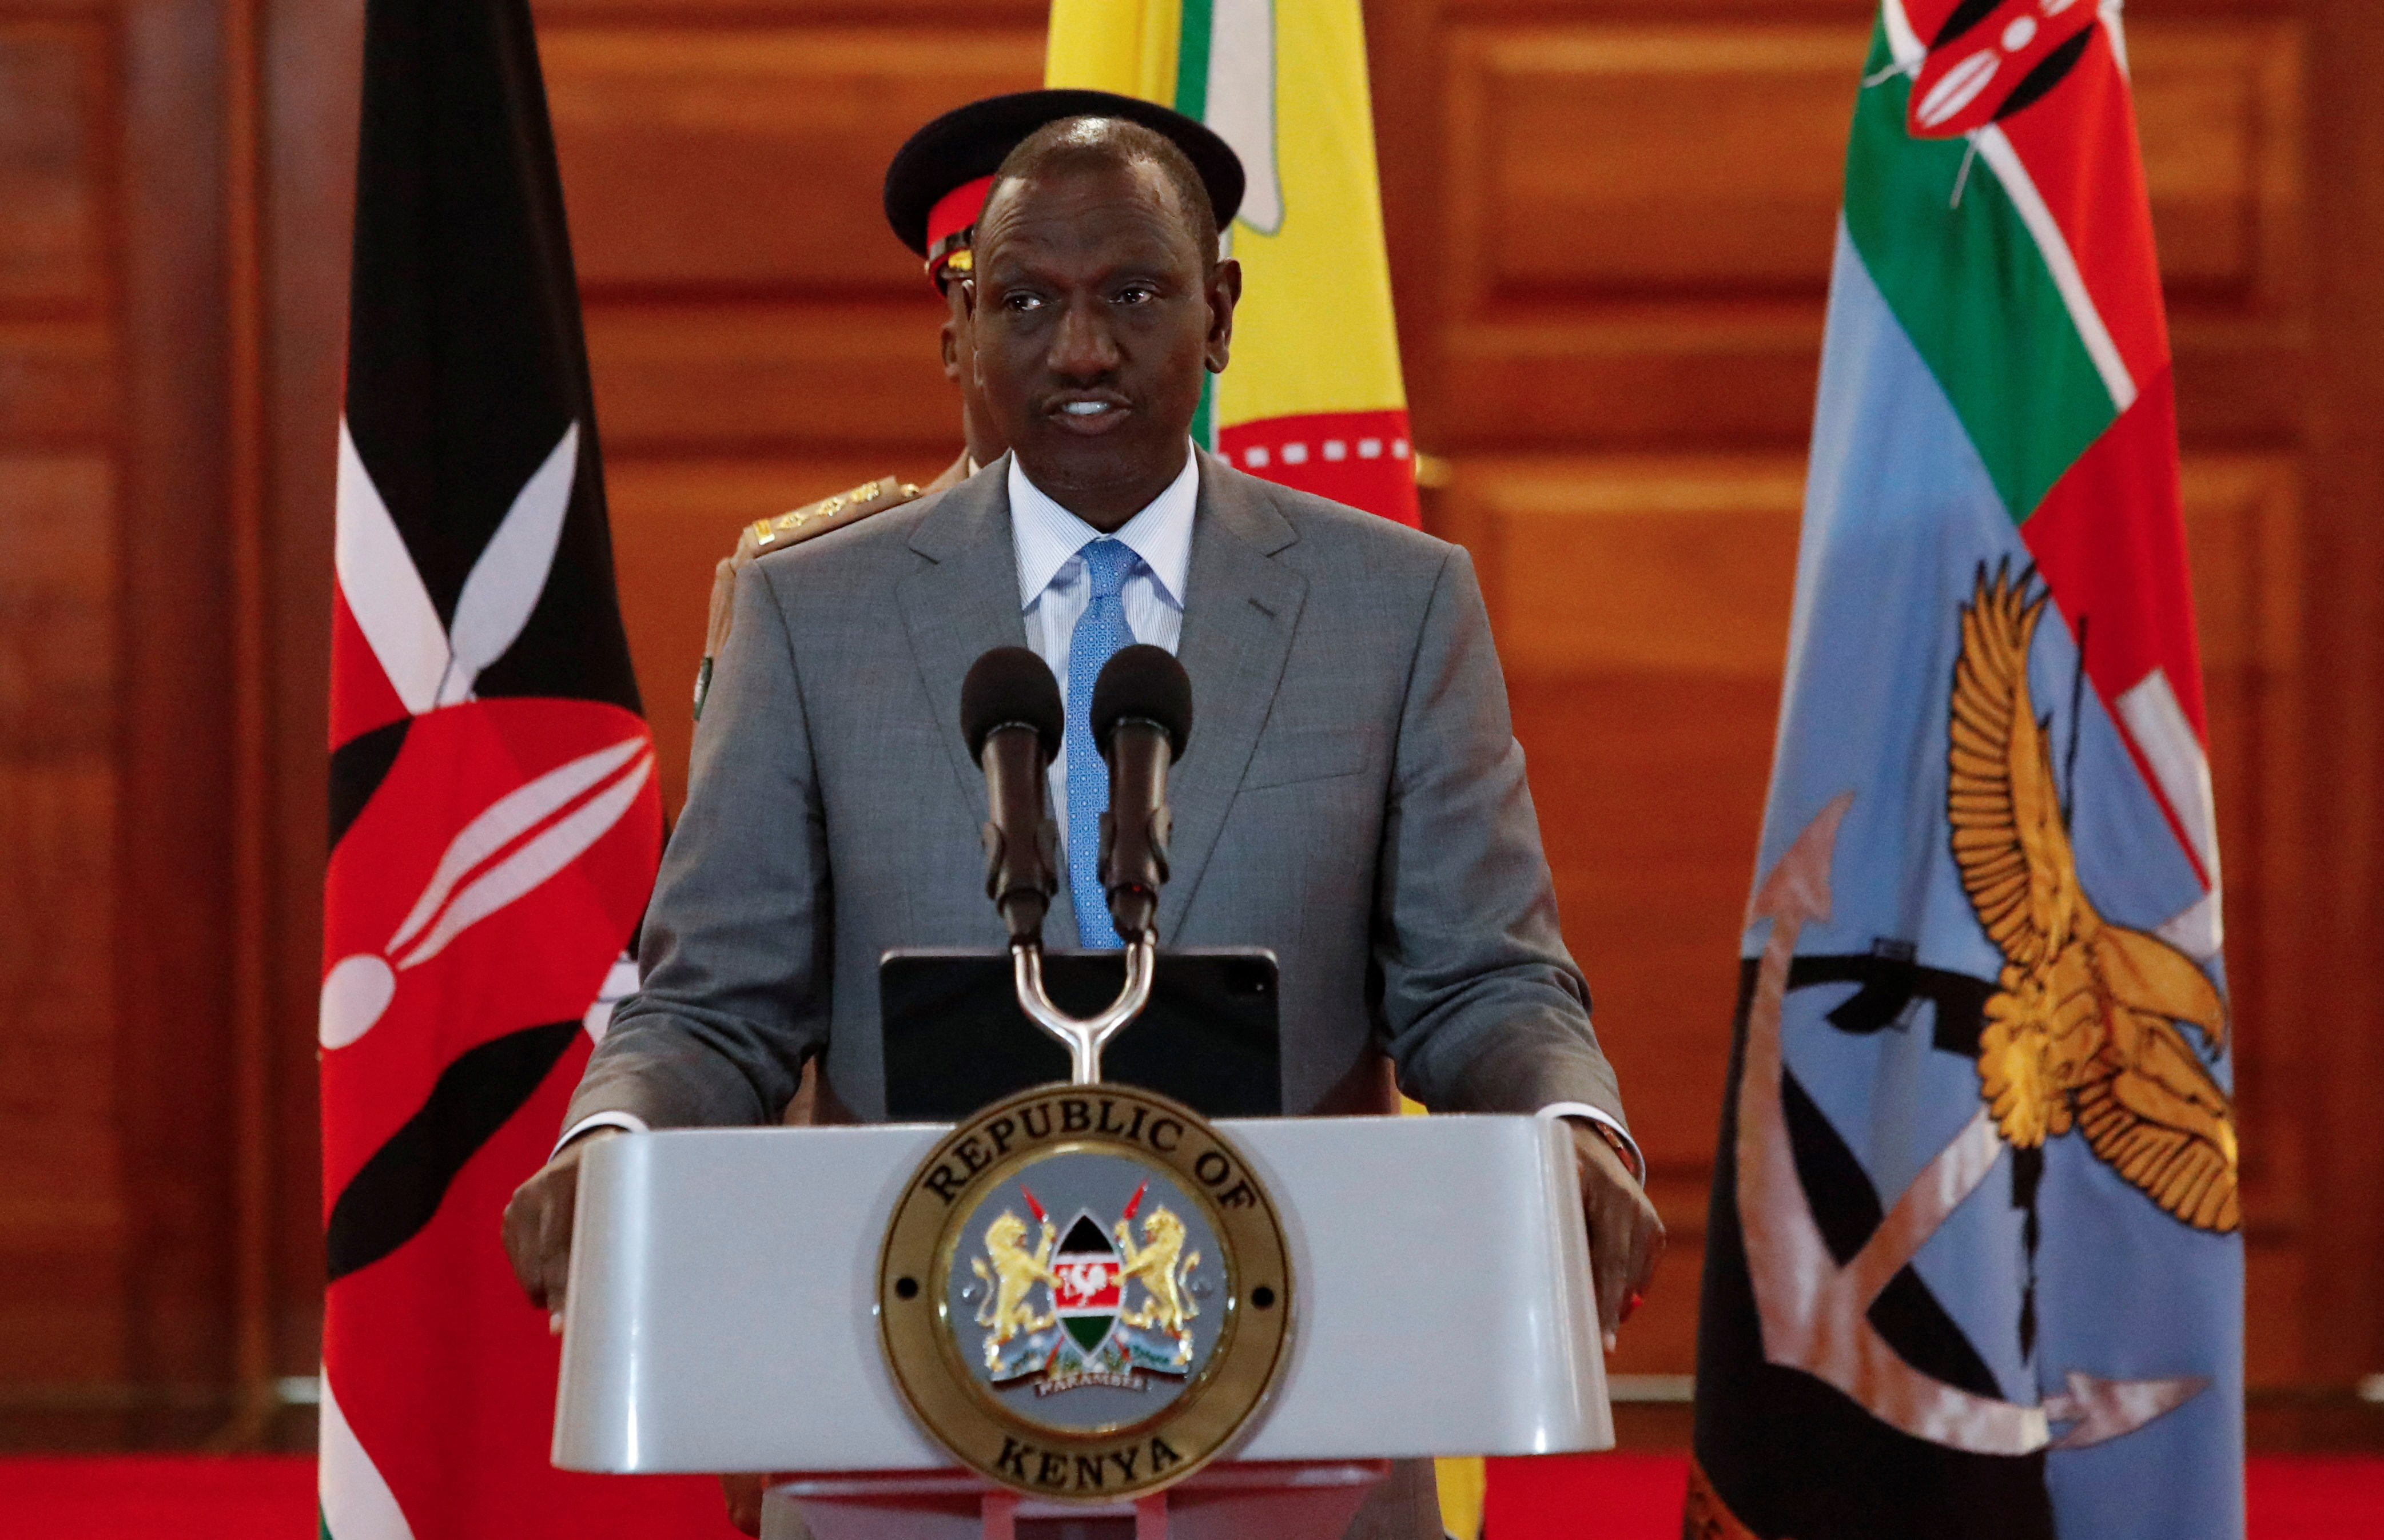 Kenya's President William Ruto speaks at a press conference in Nairobi